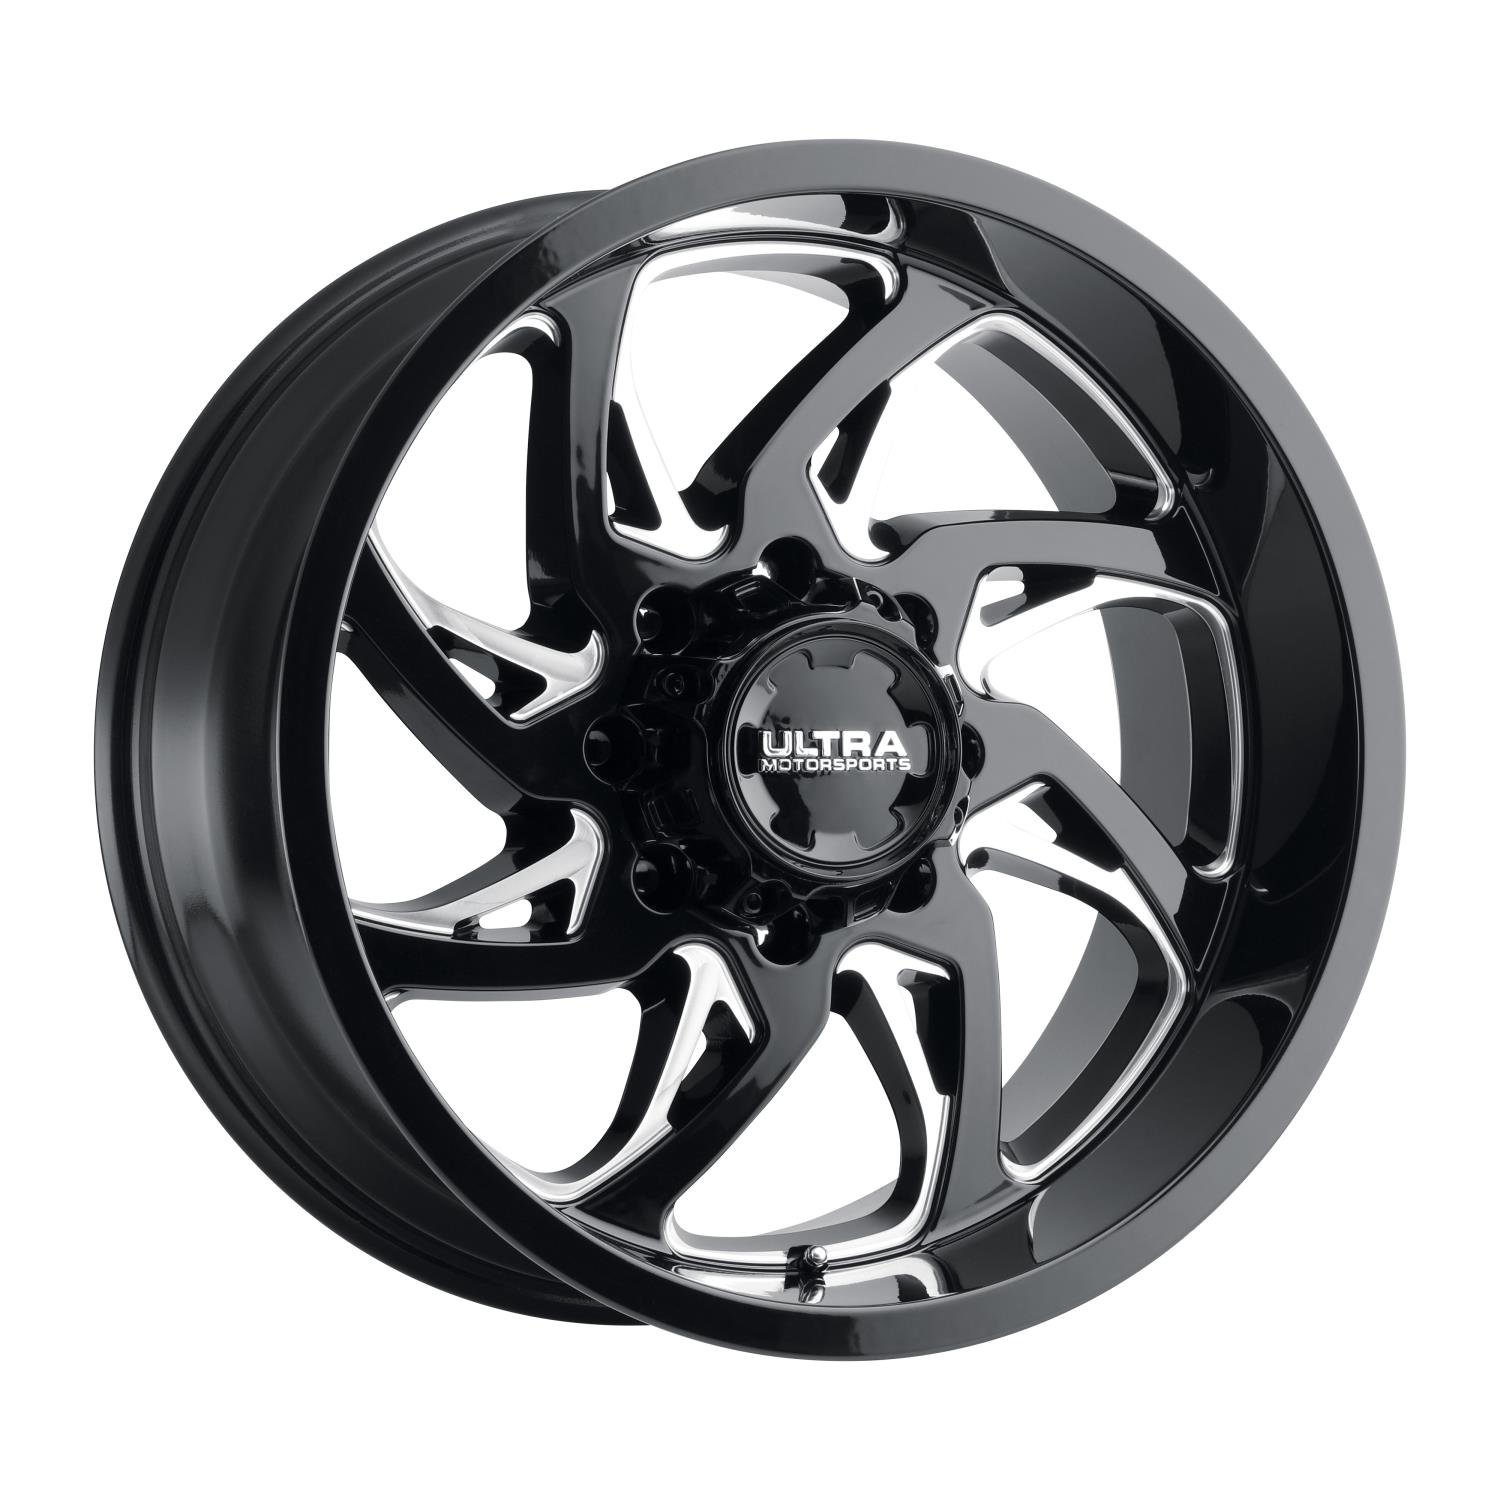 230-Series Villain Wheel, Size: 18x9", Bolt Pattern: 8x170 mm [Gloss Black w/Milled Accents]